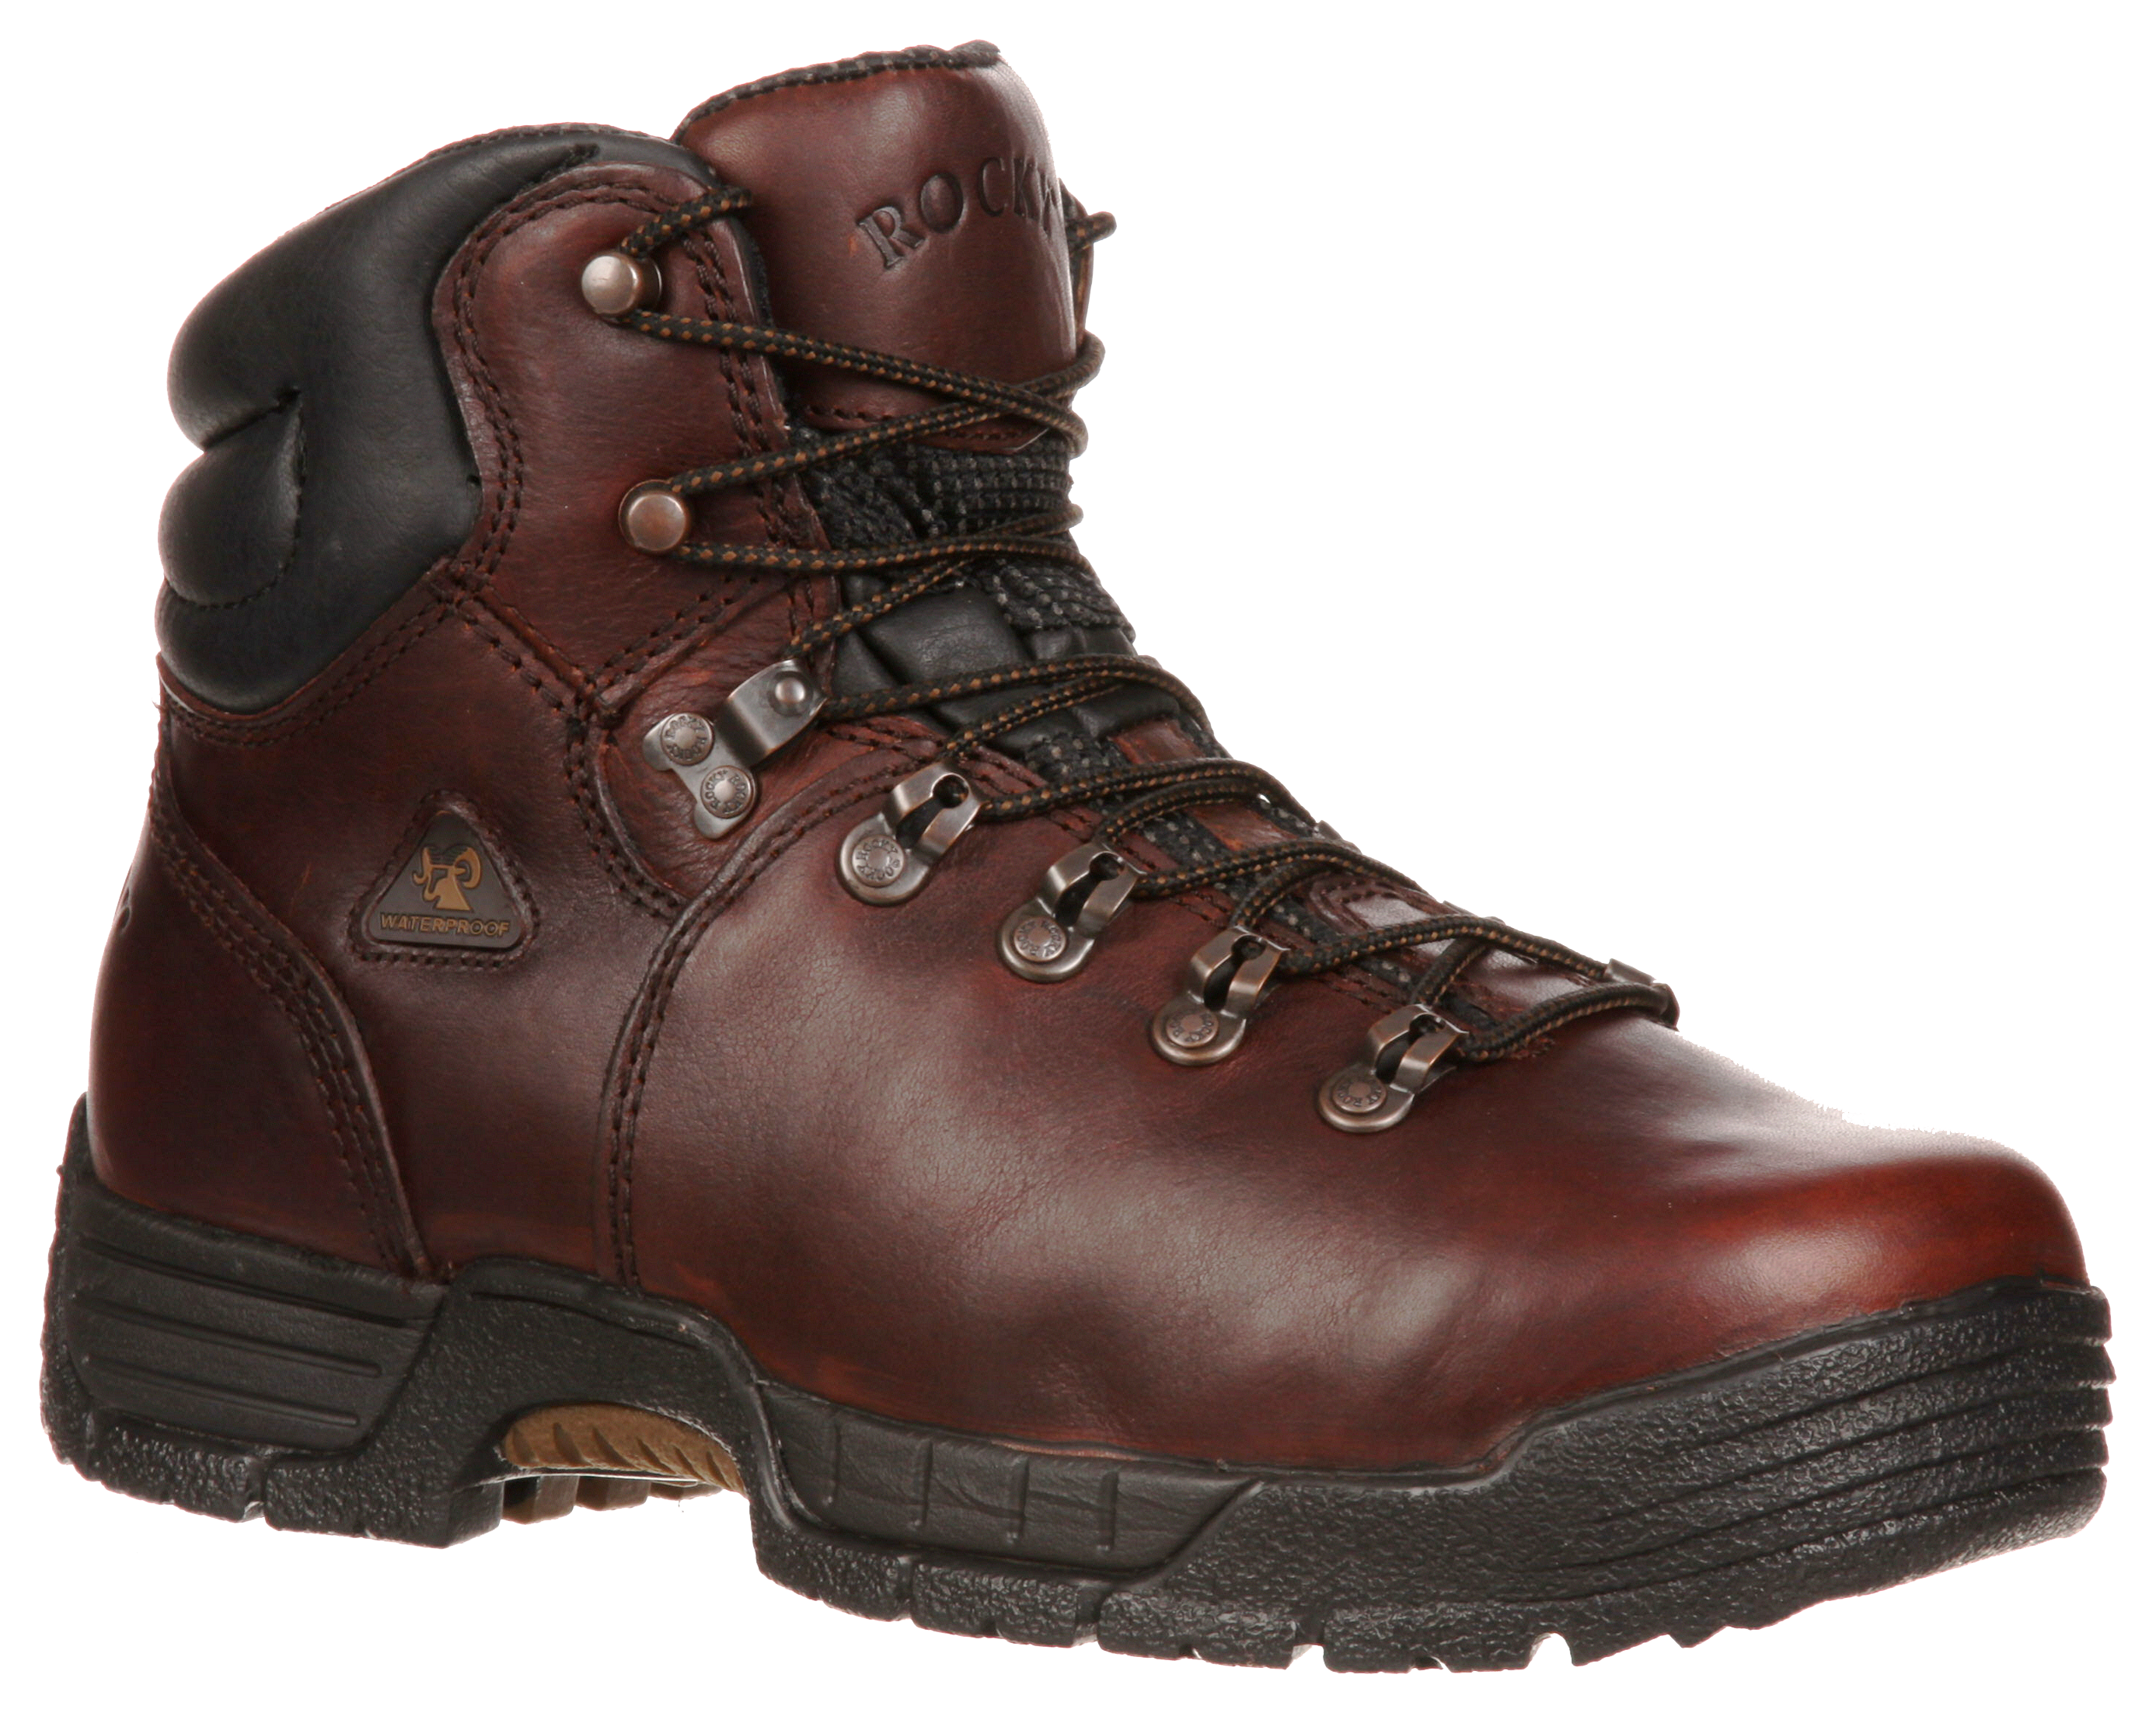 ROCKY MobiLite Waterproof Steel Toe Work Boots for Men - Brown - 8.5 W